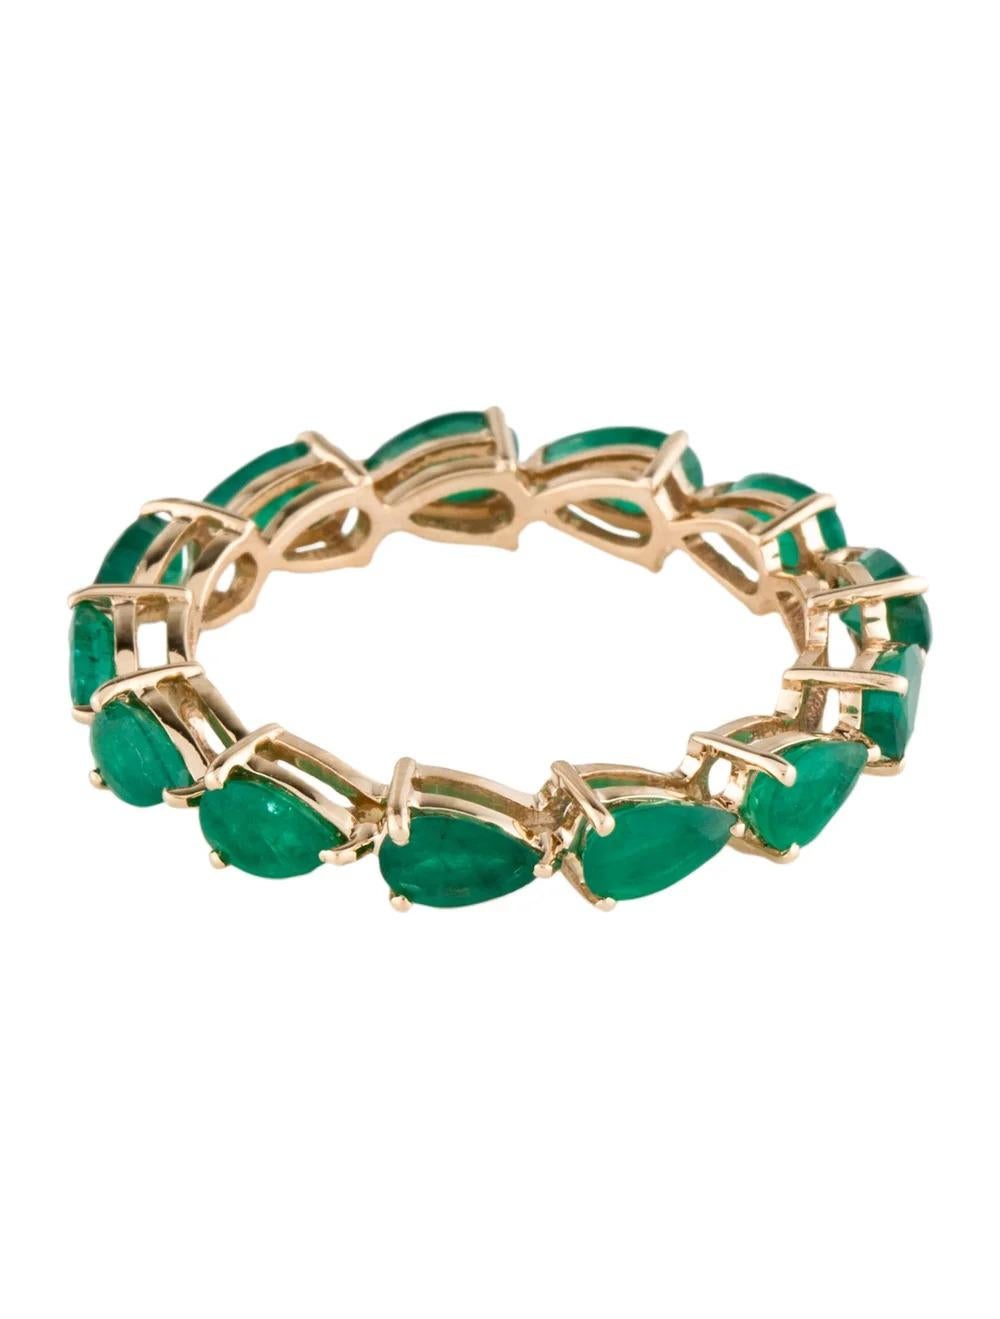 Pear Cut 14K Emerald Eternity Band Ring Size 7.75 - Gemstone Fine Jewelry Vintage Style